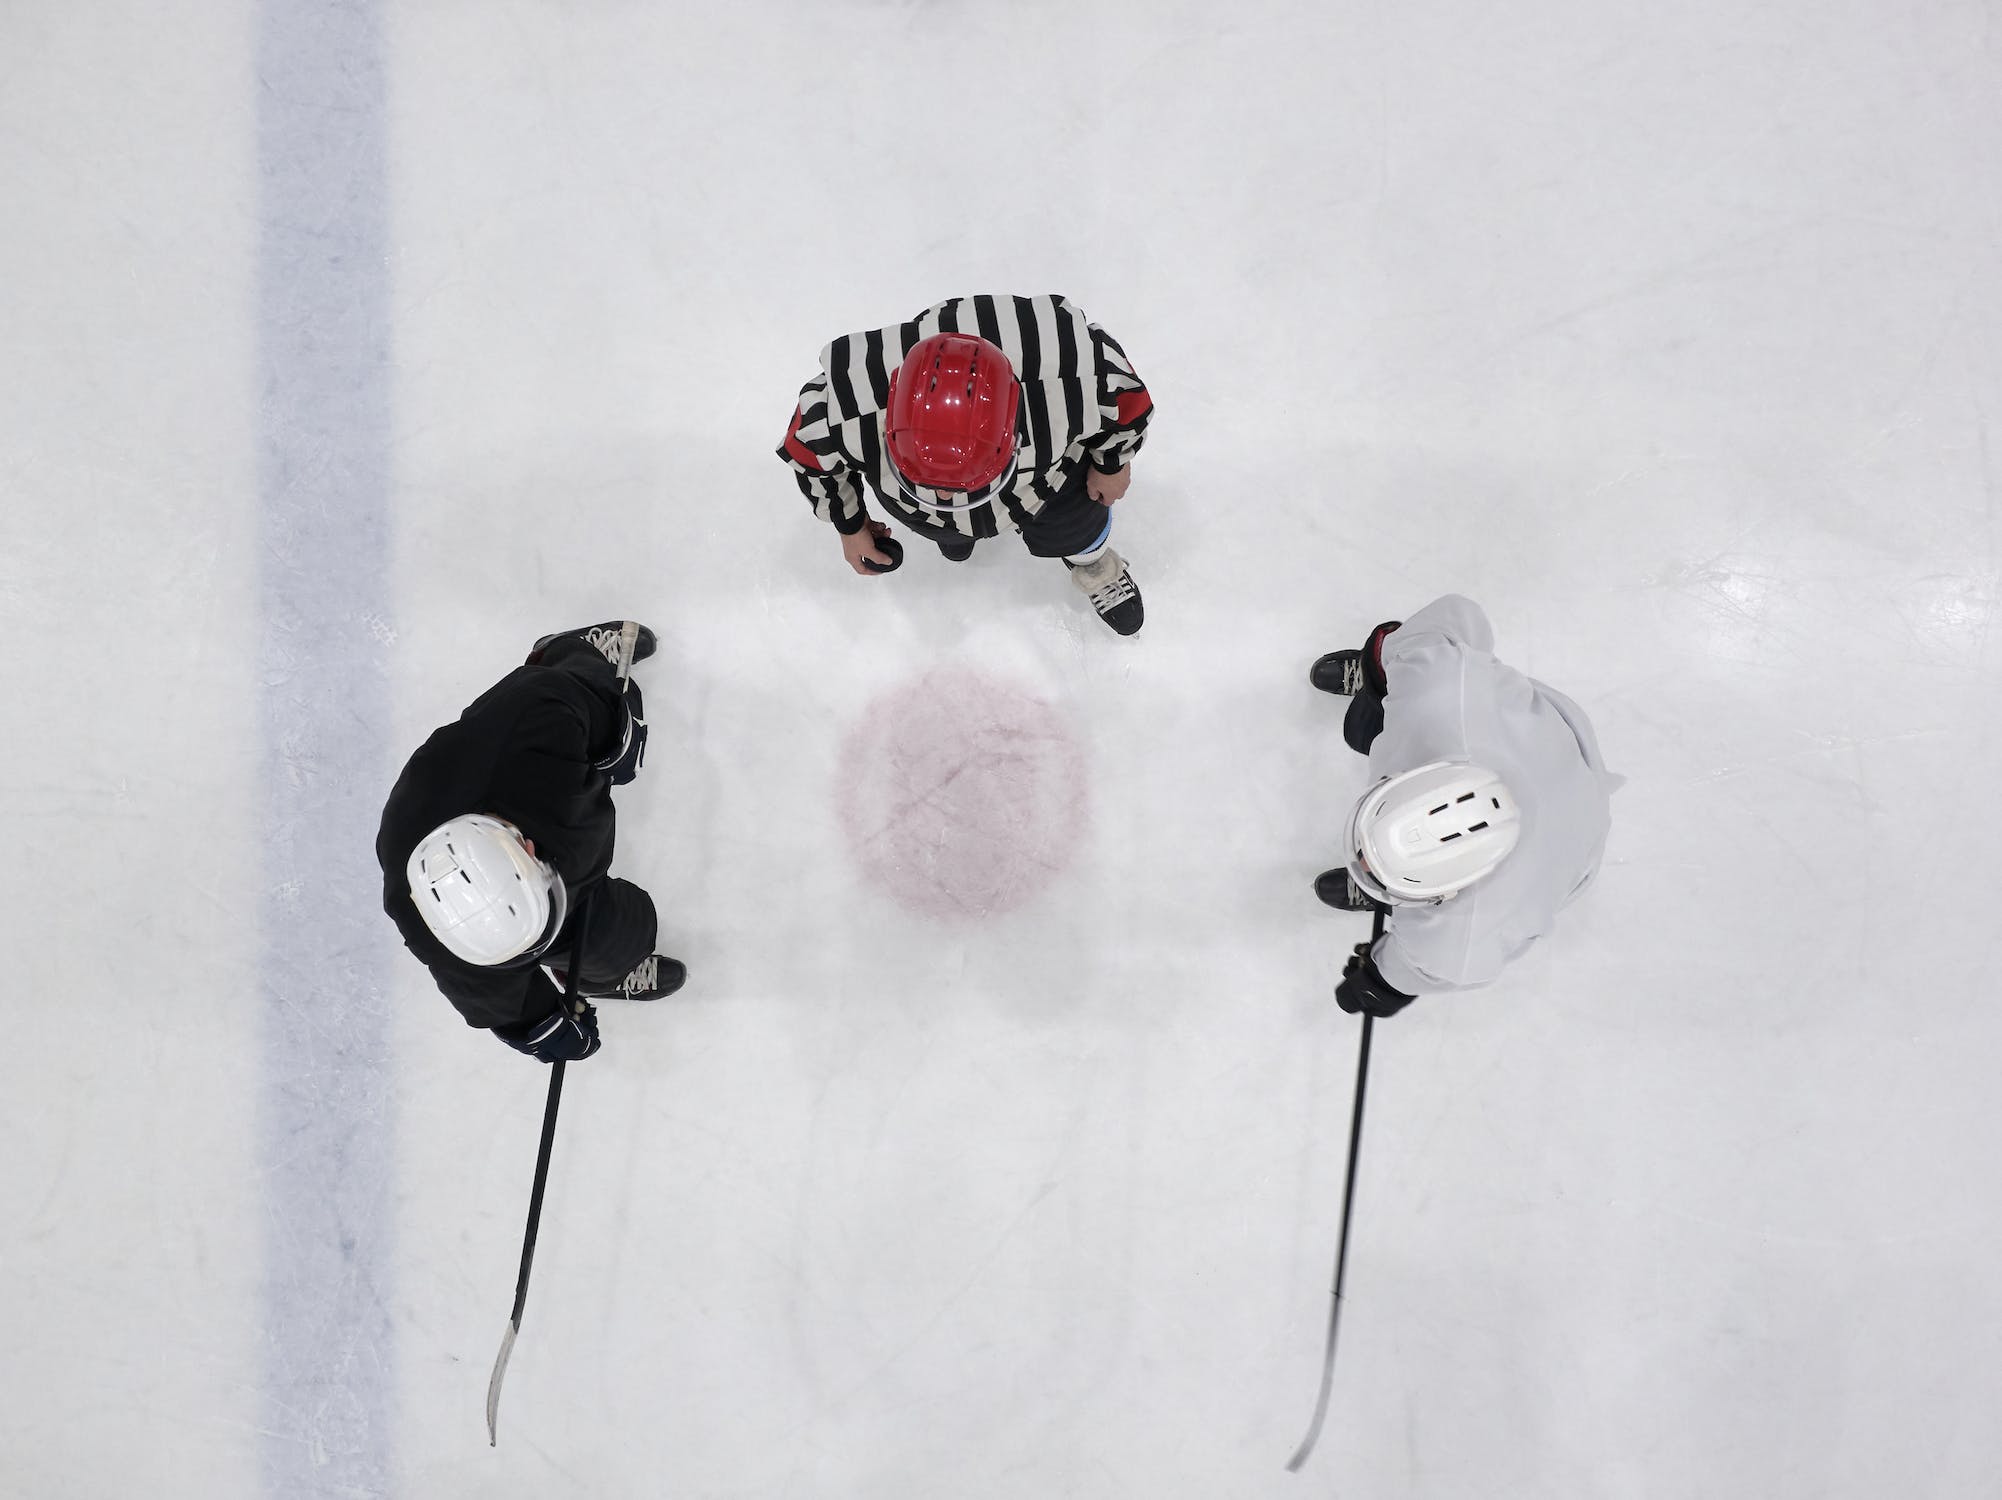 hockey faceoffs ariel view